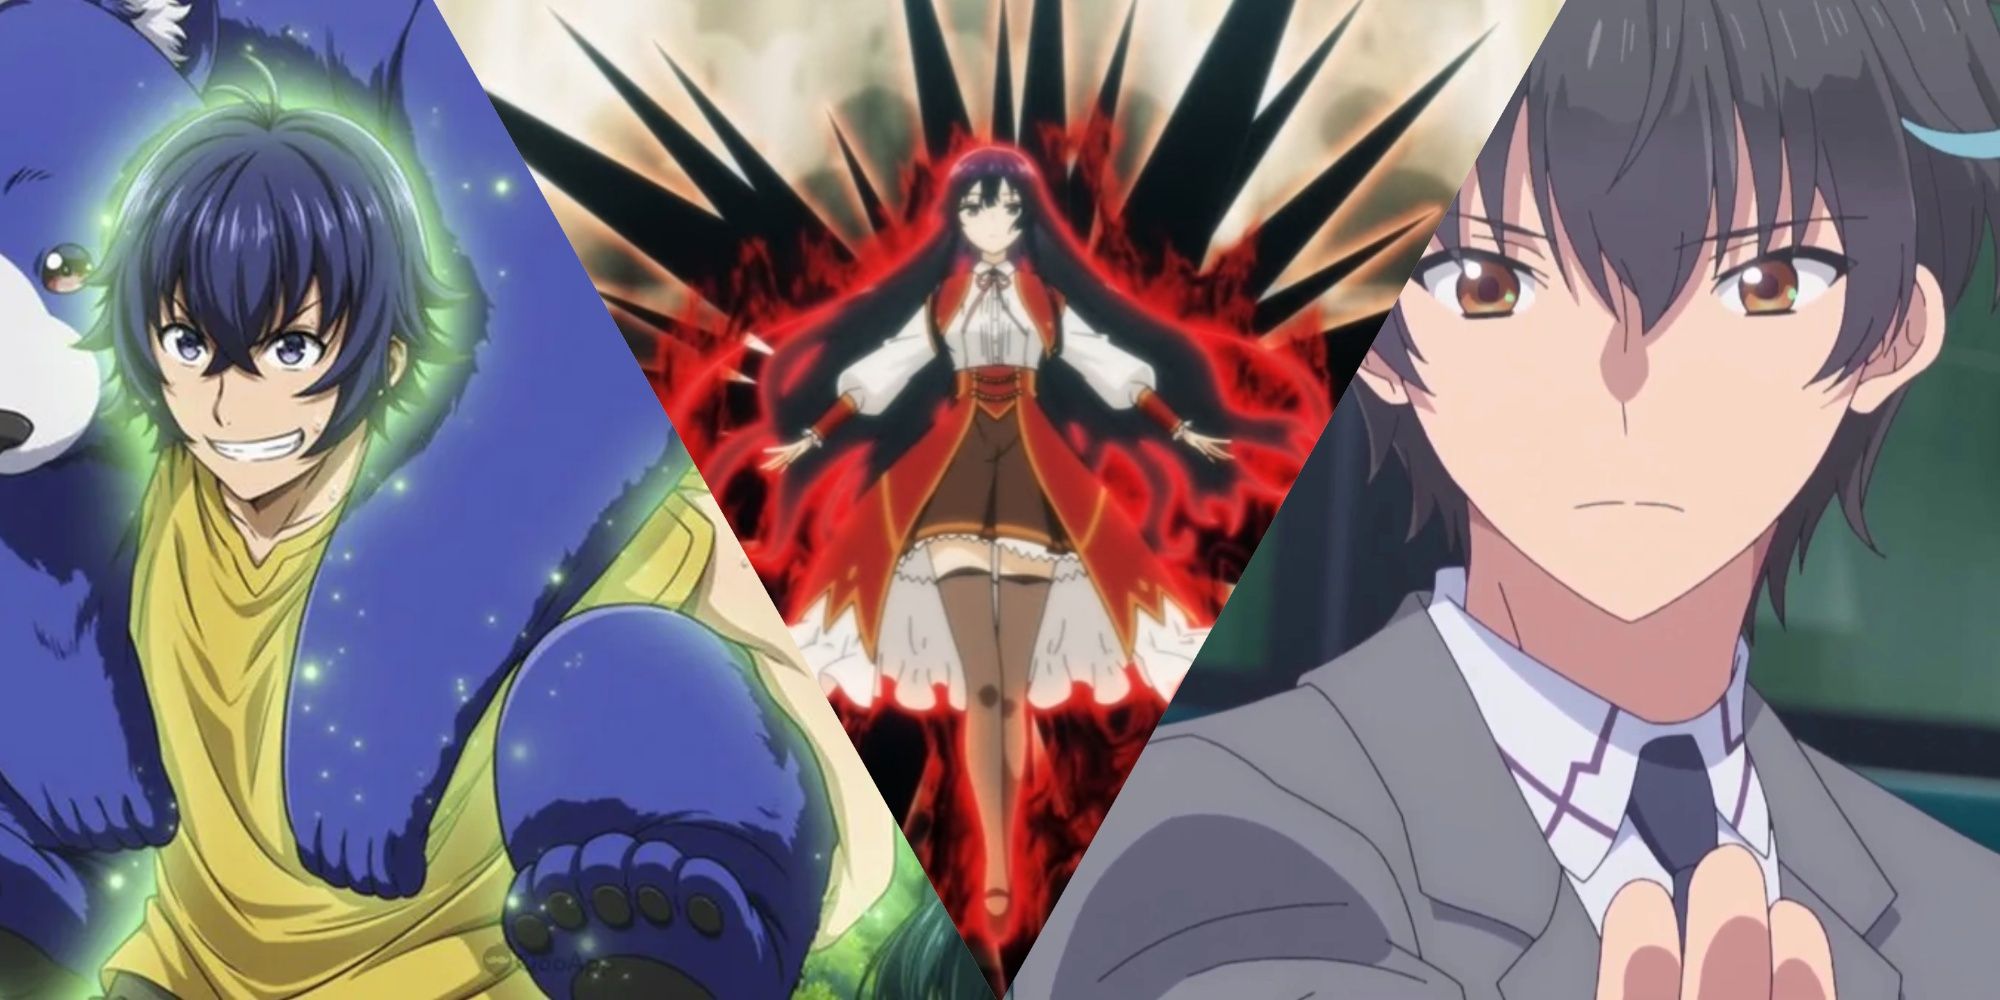 5 Heroic & 5 Villainous Anime Groups We'd Love To Join